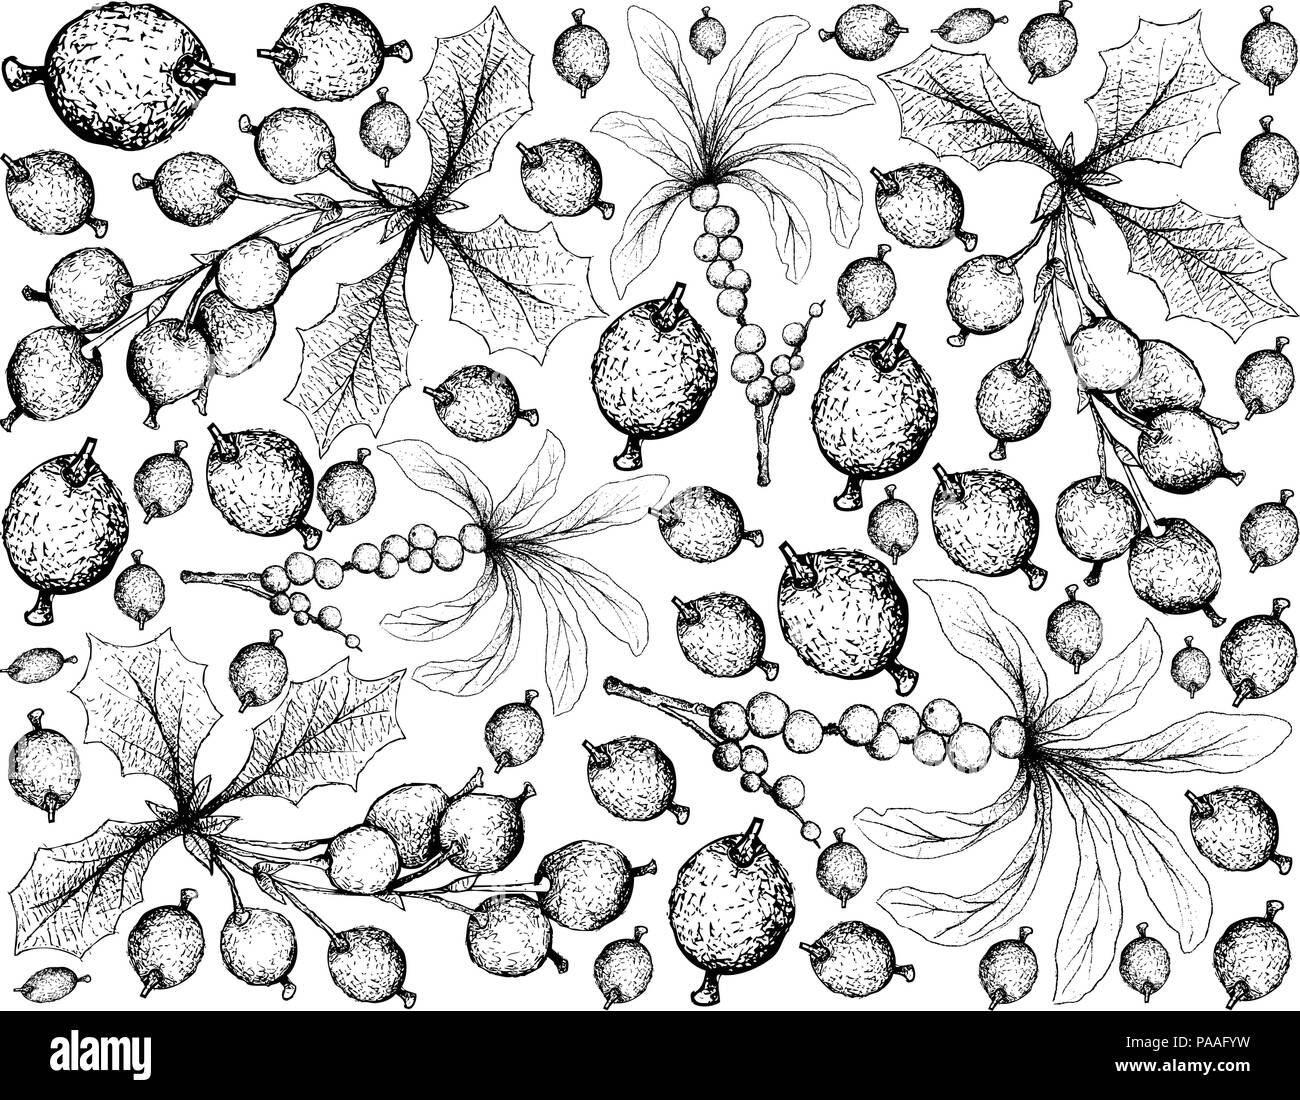 Berry Fruit, Illustration Wallpaper Background of Hand Drawn Sketch of Fresh February Daphne or Daphne Mezereum and Barberries or Berberis Vulgaris Fr Stock Vector